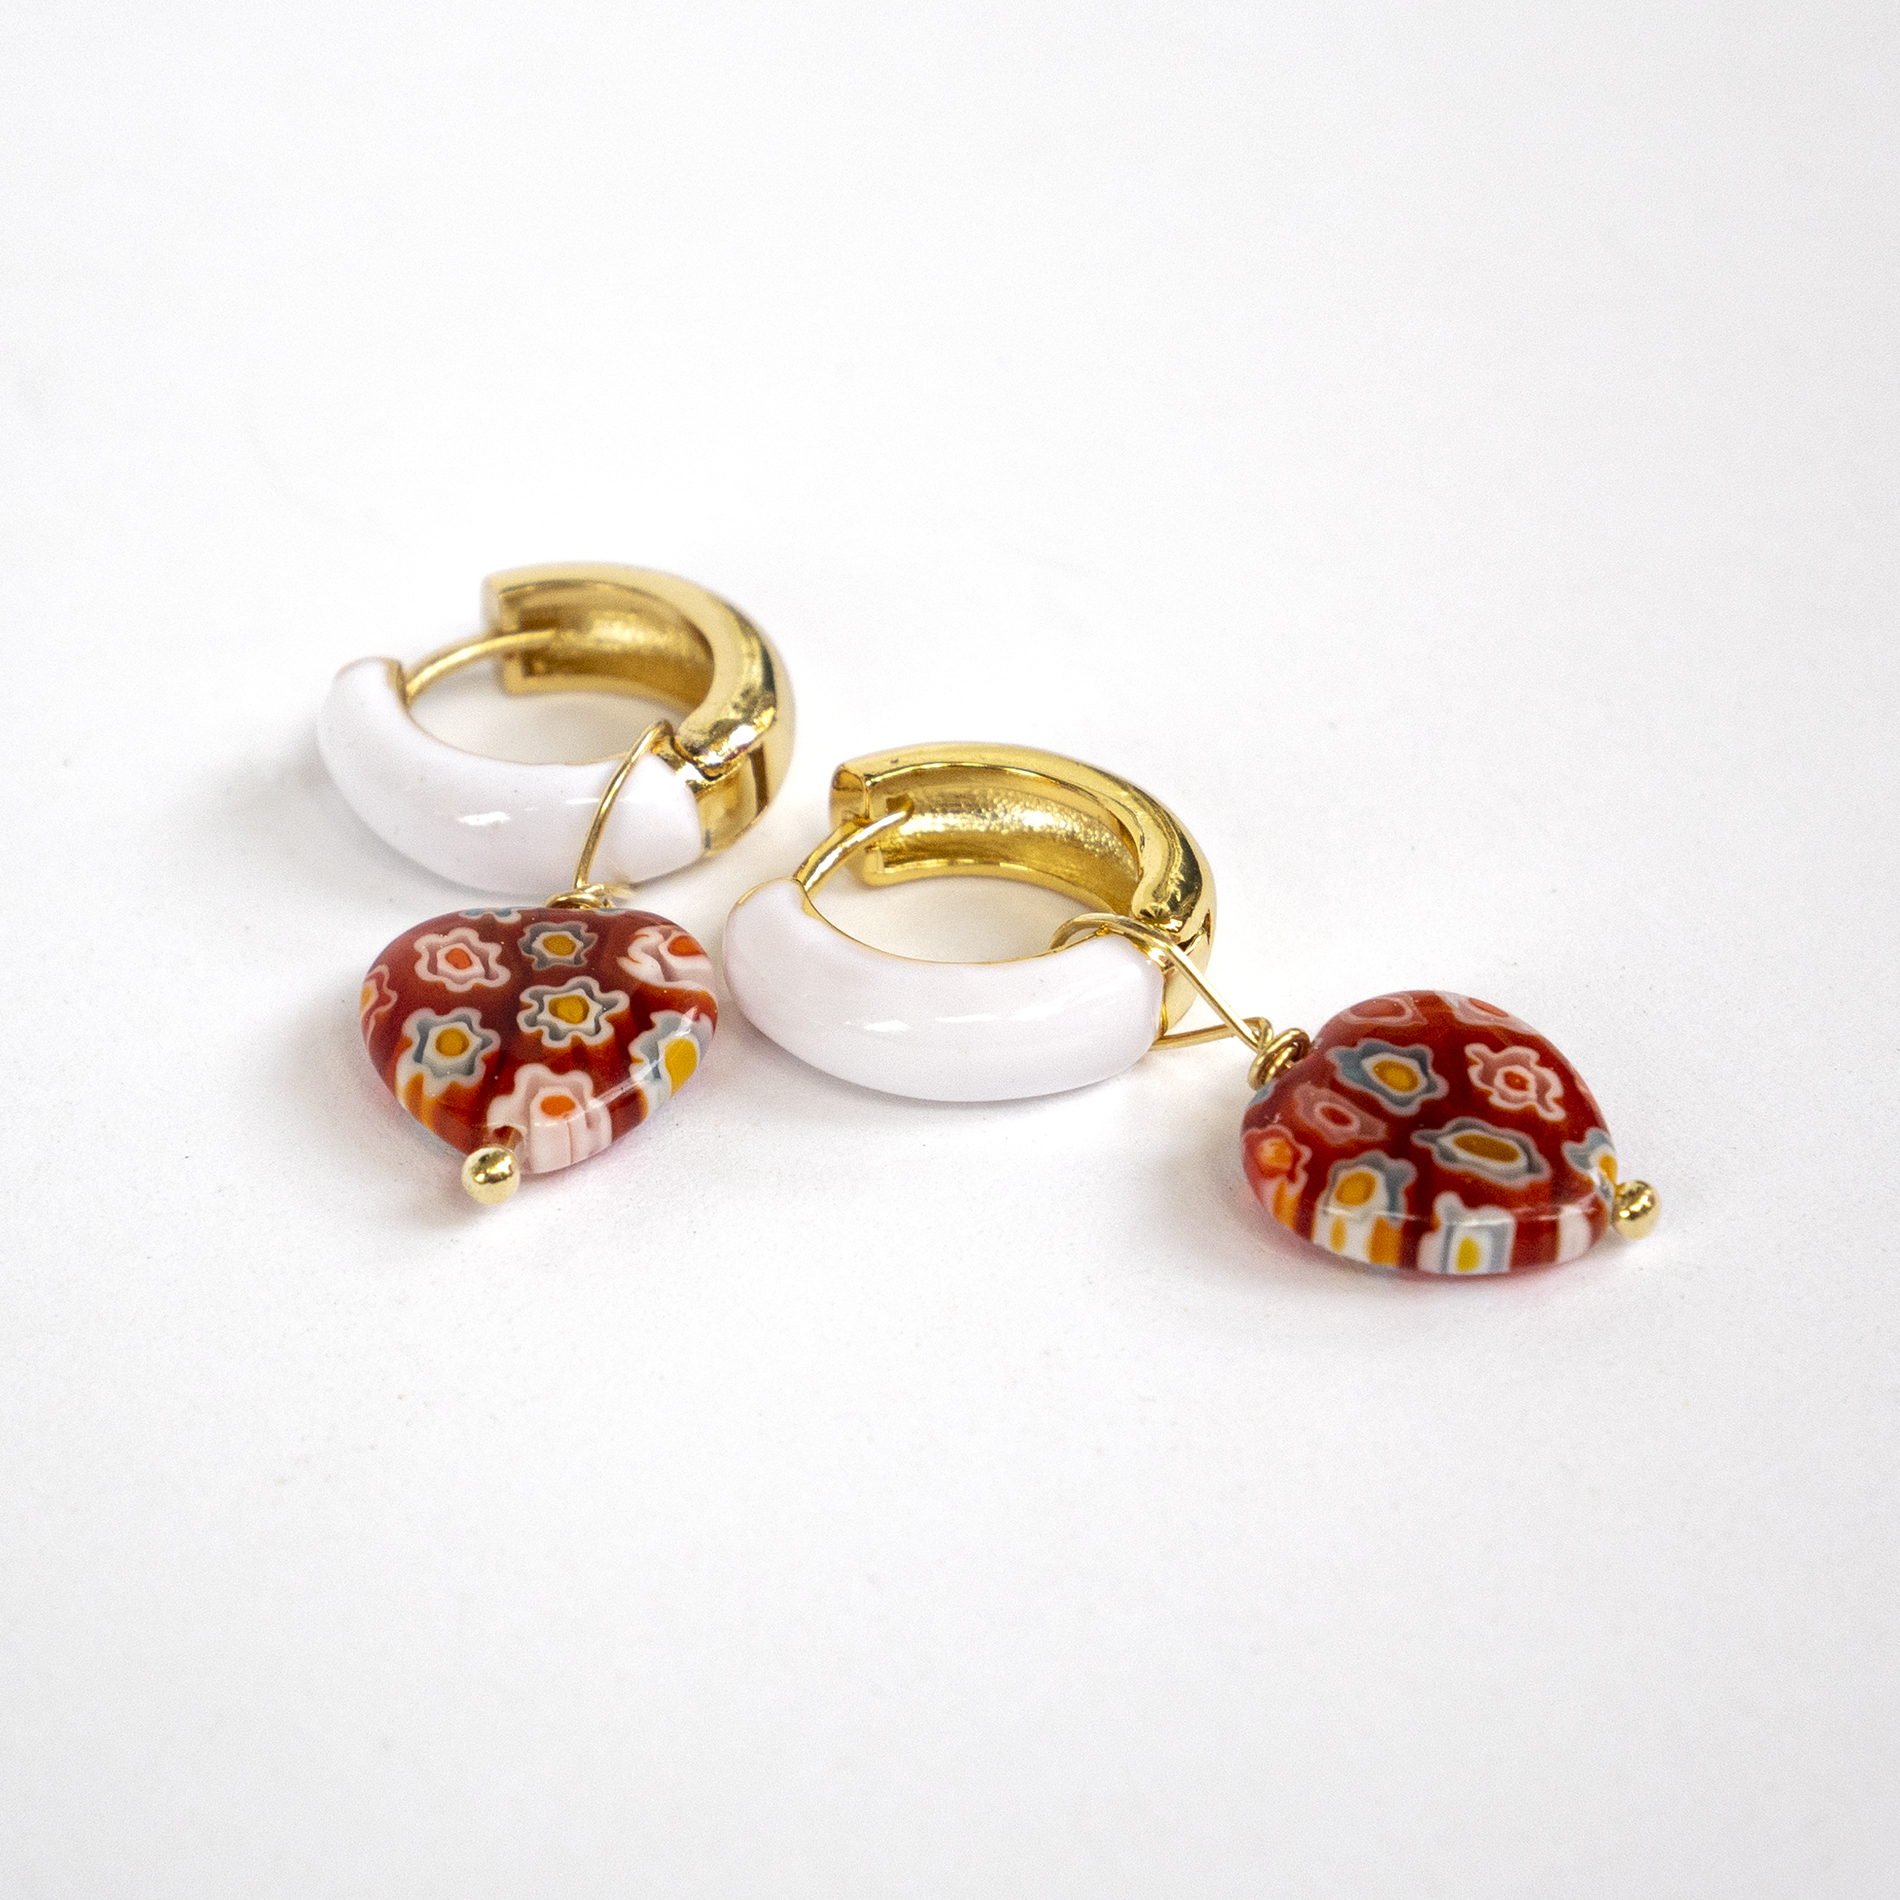 Stainless steal white enamel hoop earrings with orange millefiori heart beads.